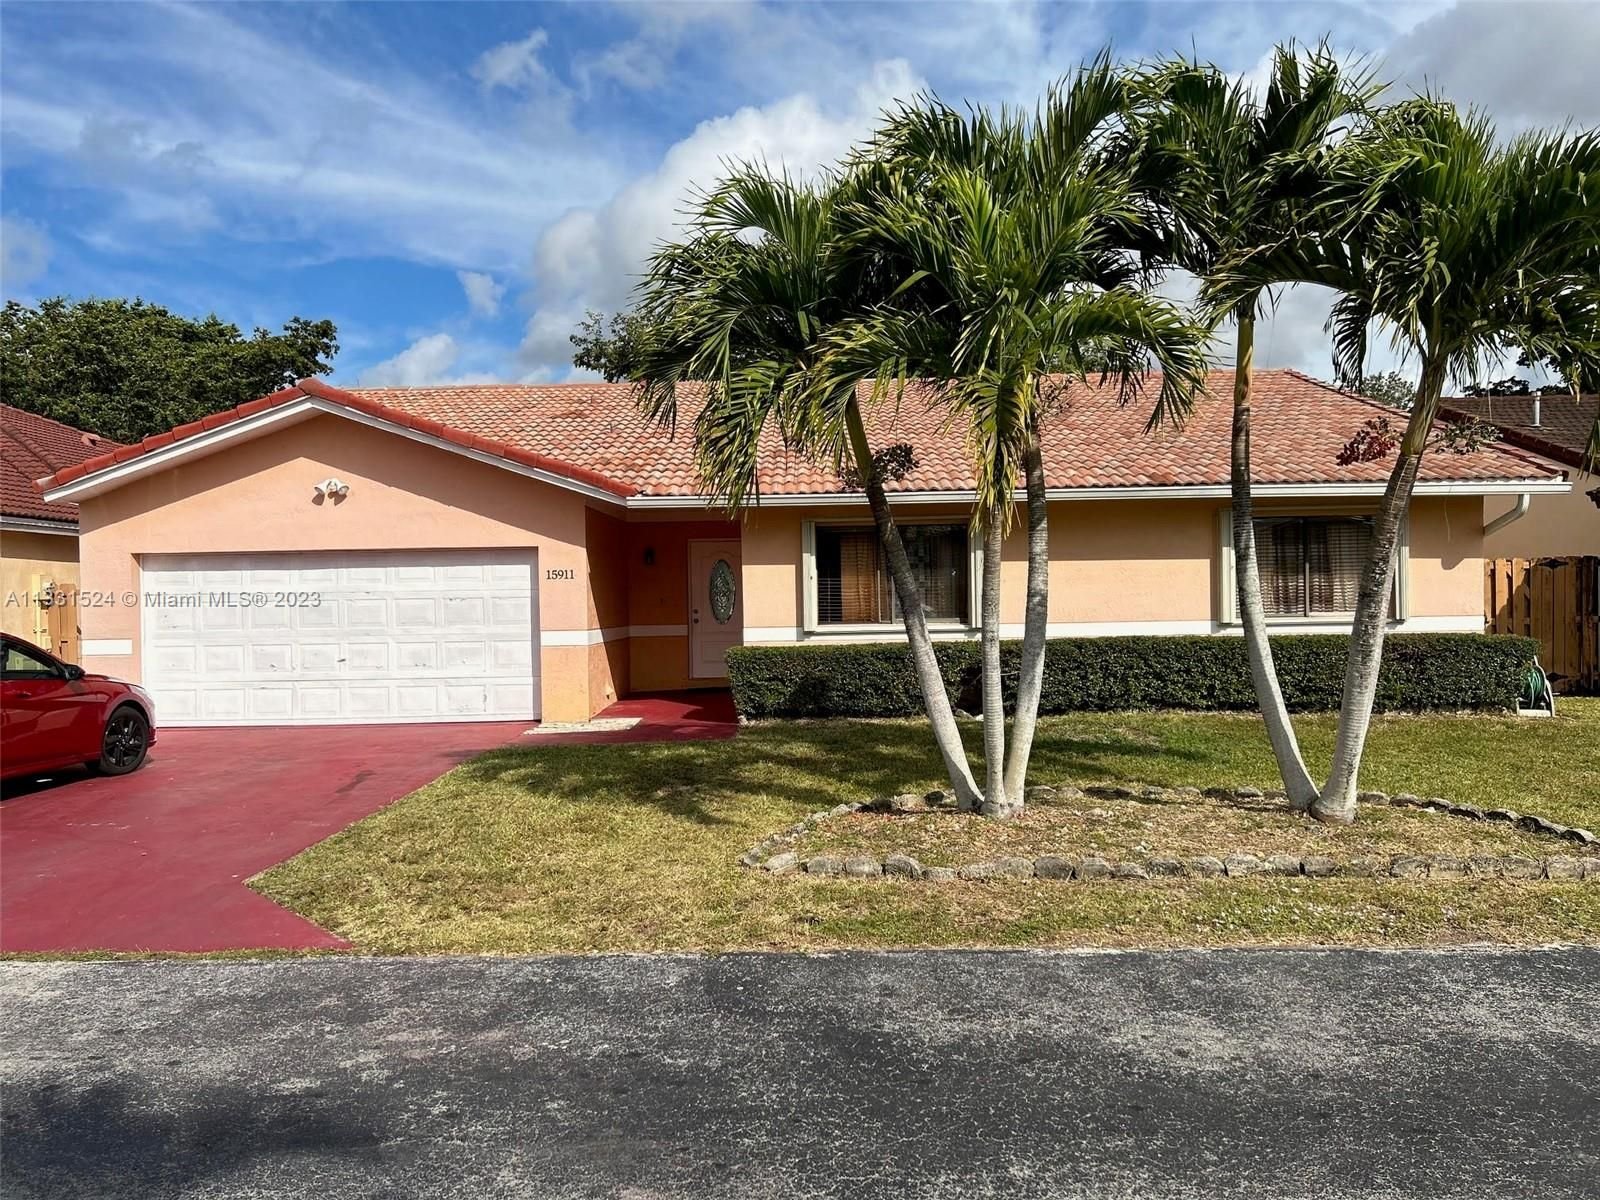 Real estate property located at 15911 104th Ter, Miami-Dade County, Miami, FL